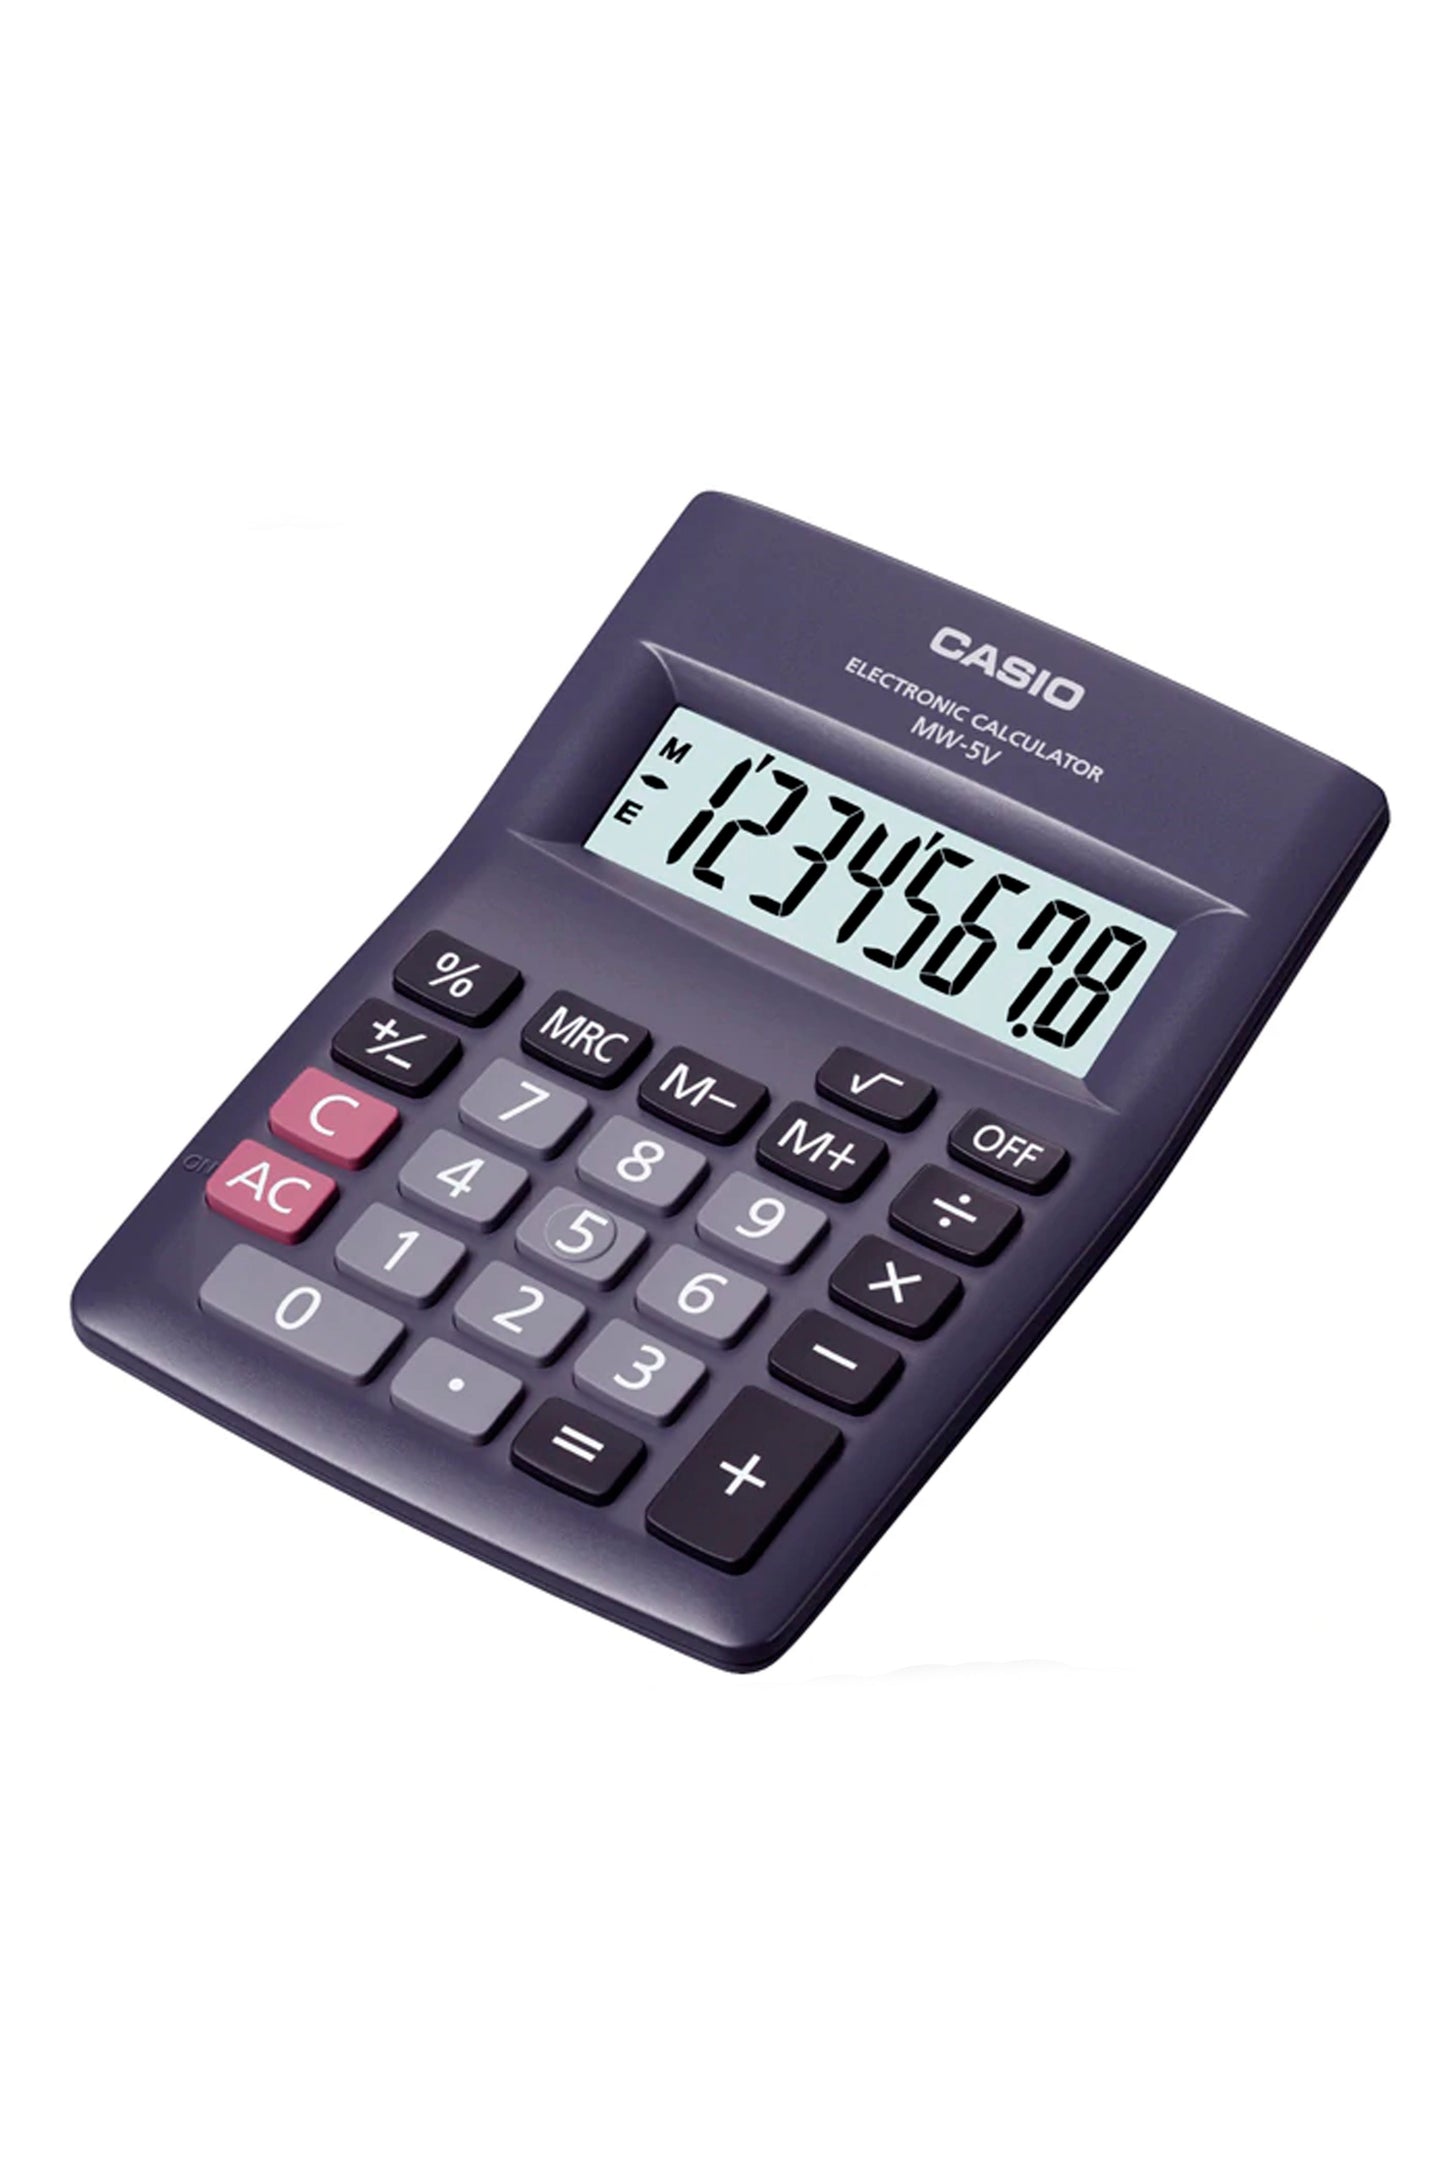 Casio Calculator Portable MW-5V Black 8-Digits